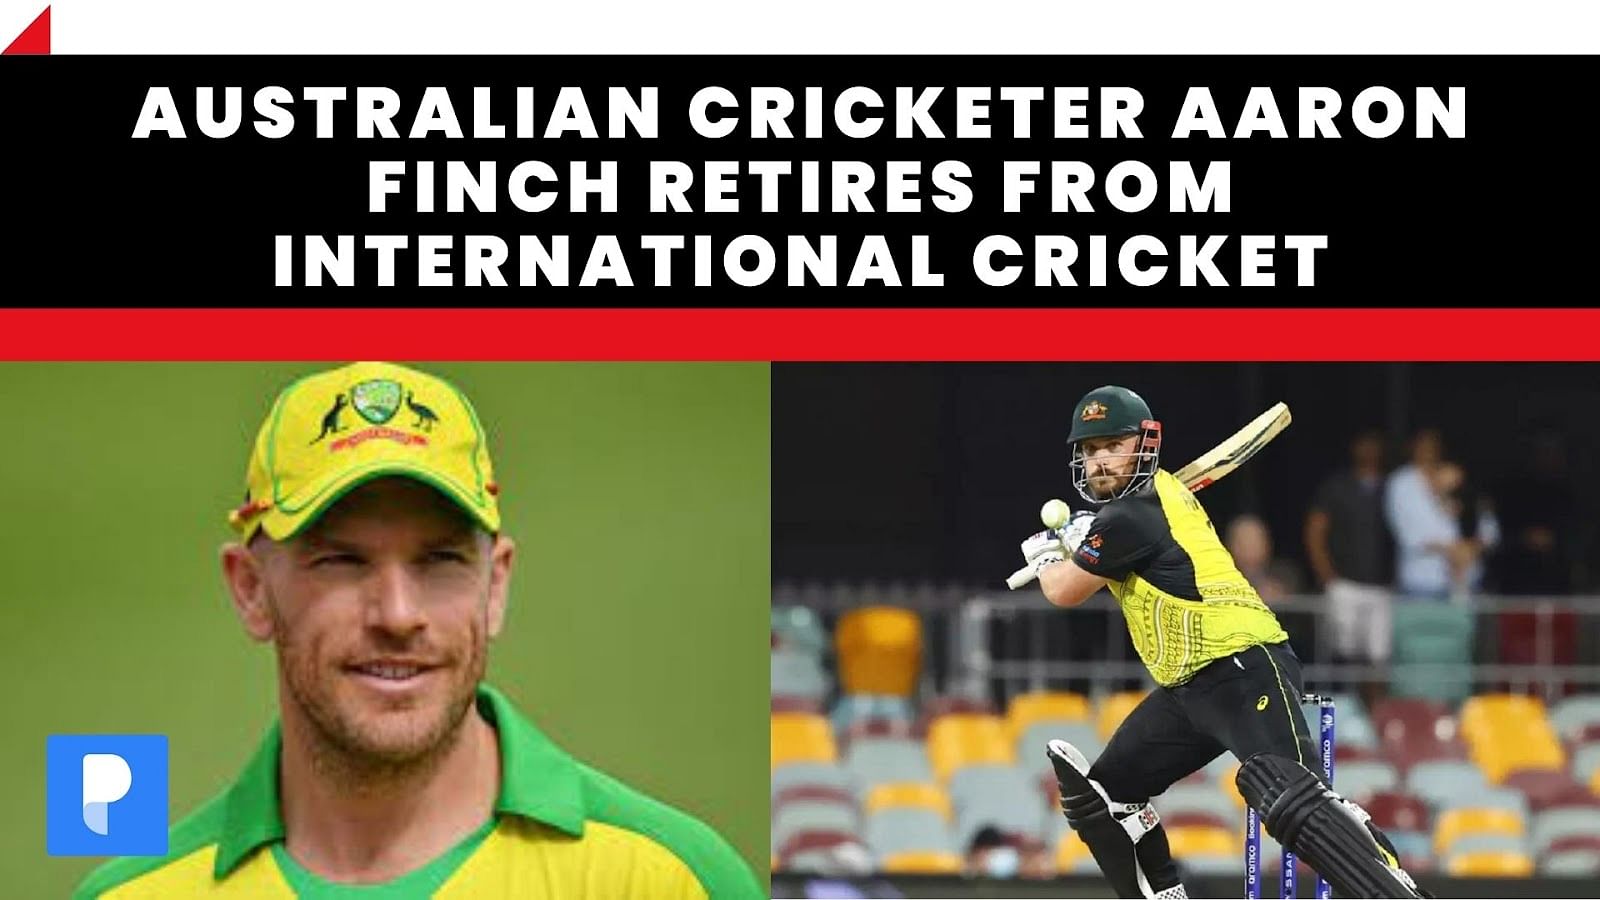 Australian Cricketer Aaron Finch Retires from International Cricket